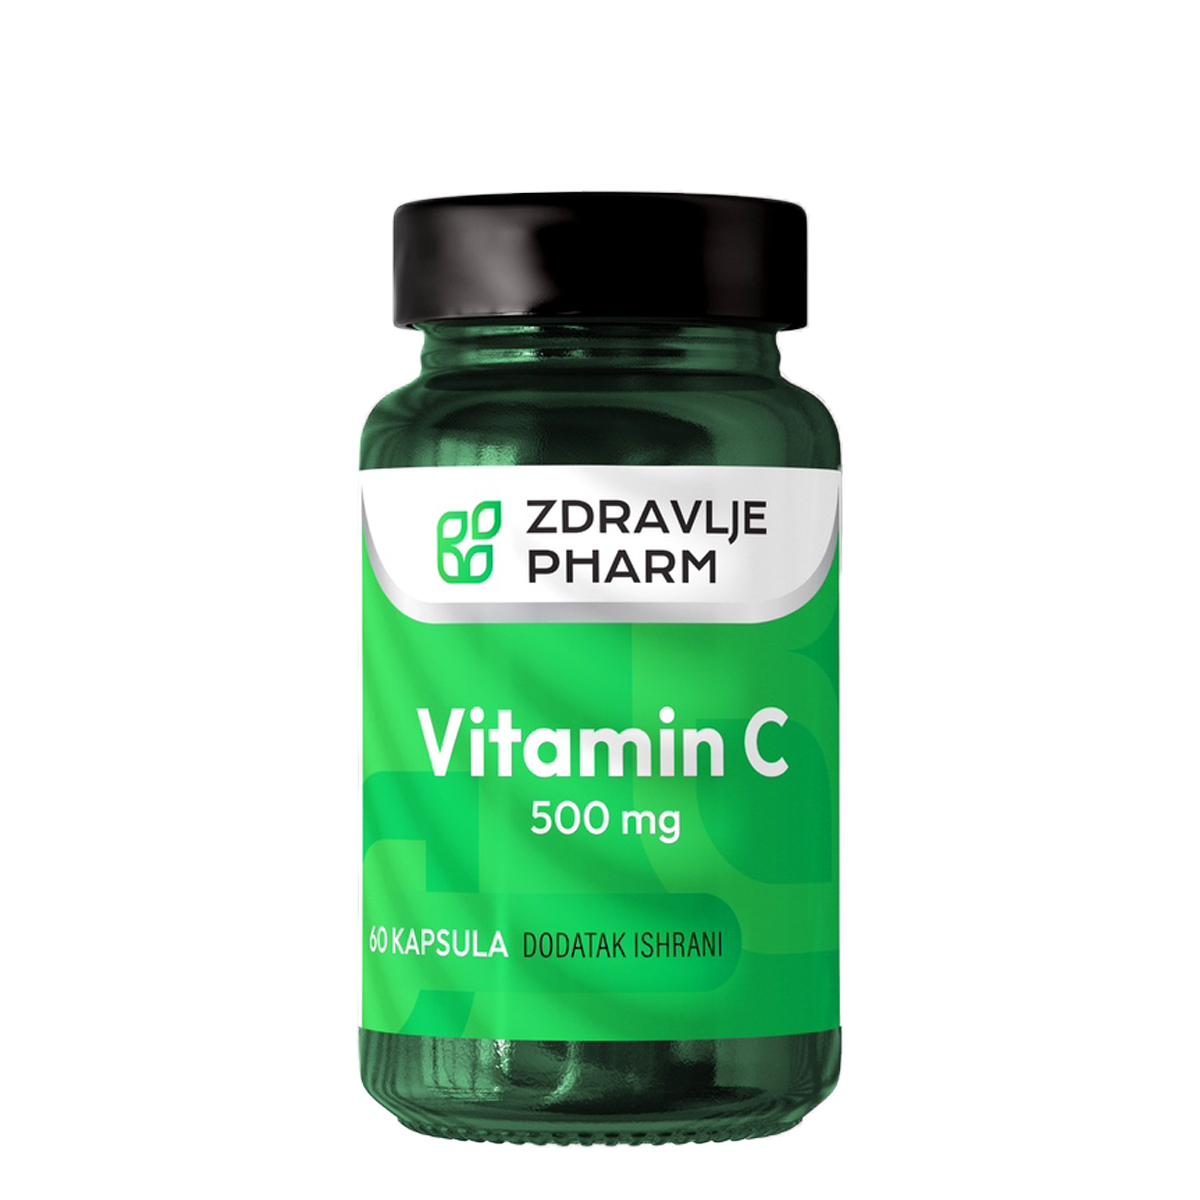 Selected image for ZDRAVLJE PHARM Vitamin C 500mg 60 kapsula